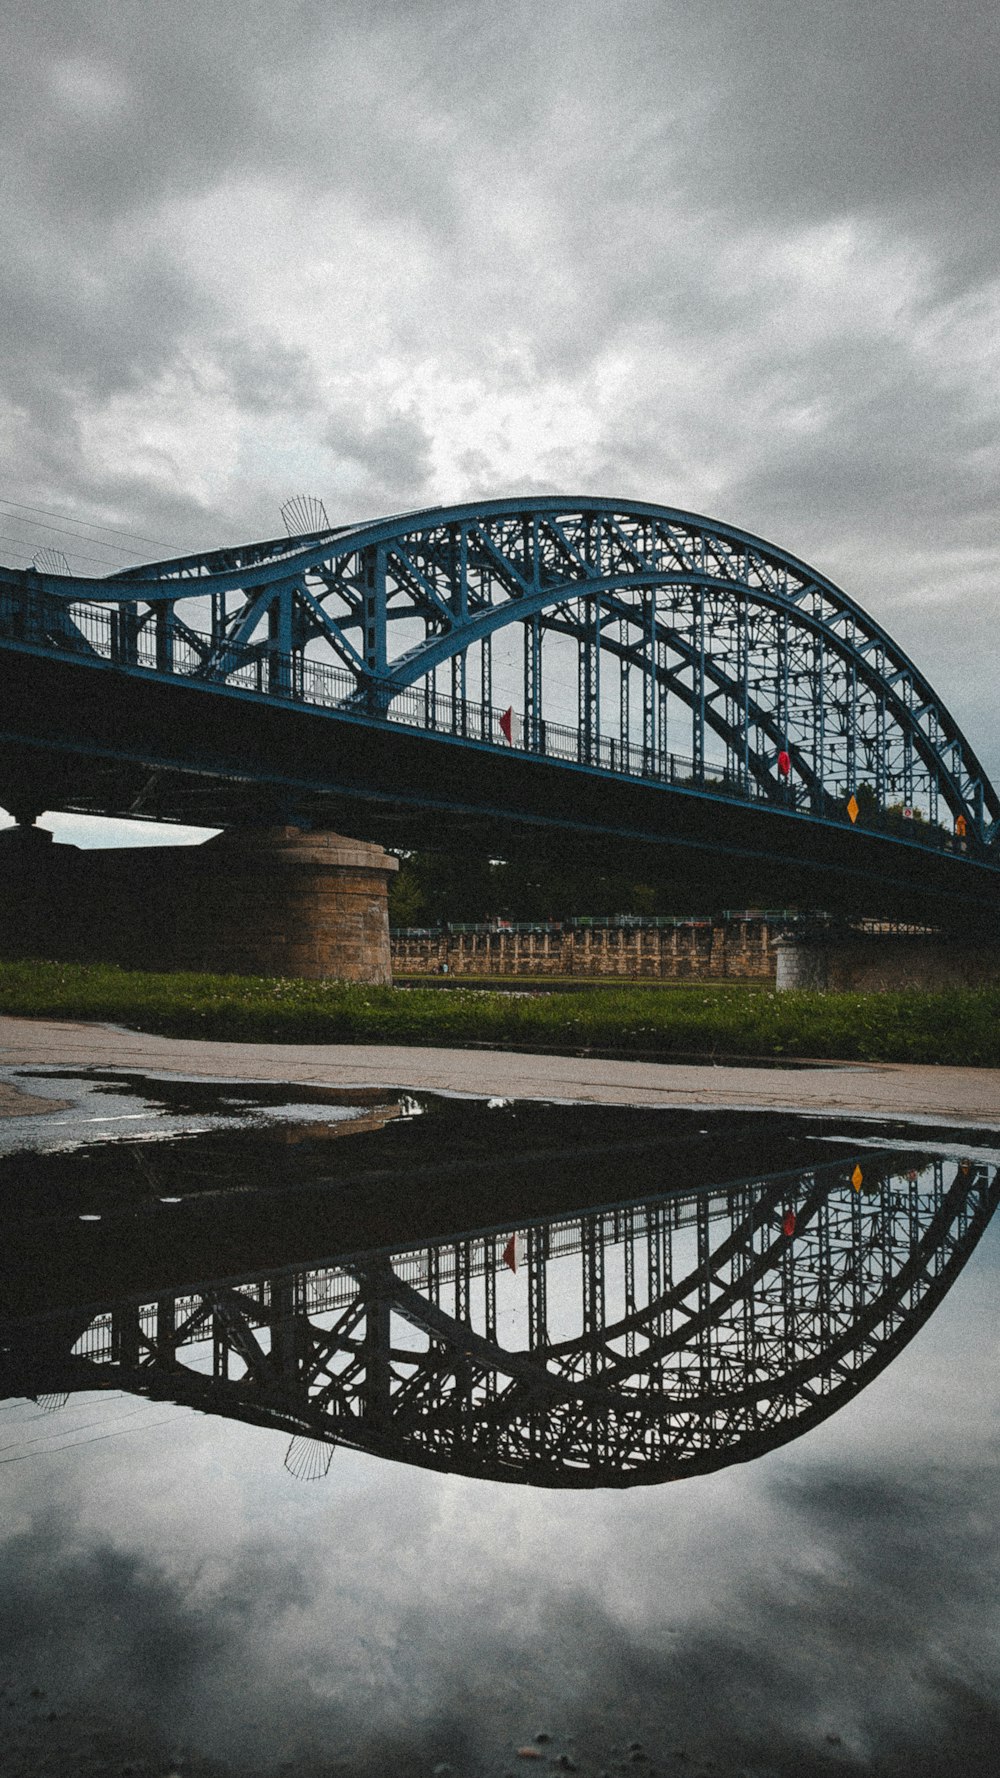 gray metal bridge over river